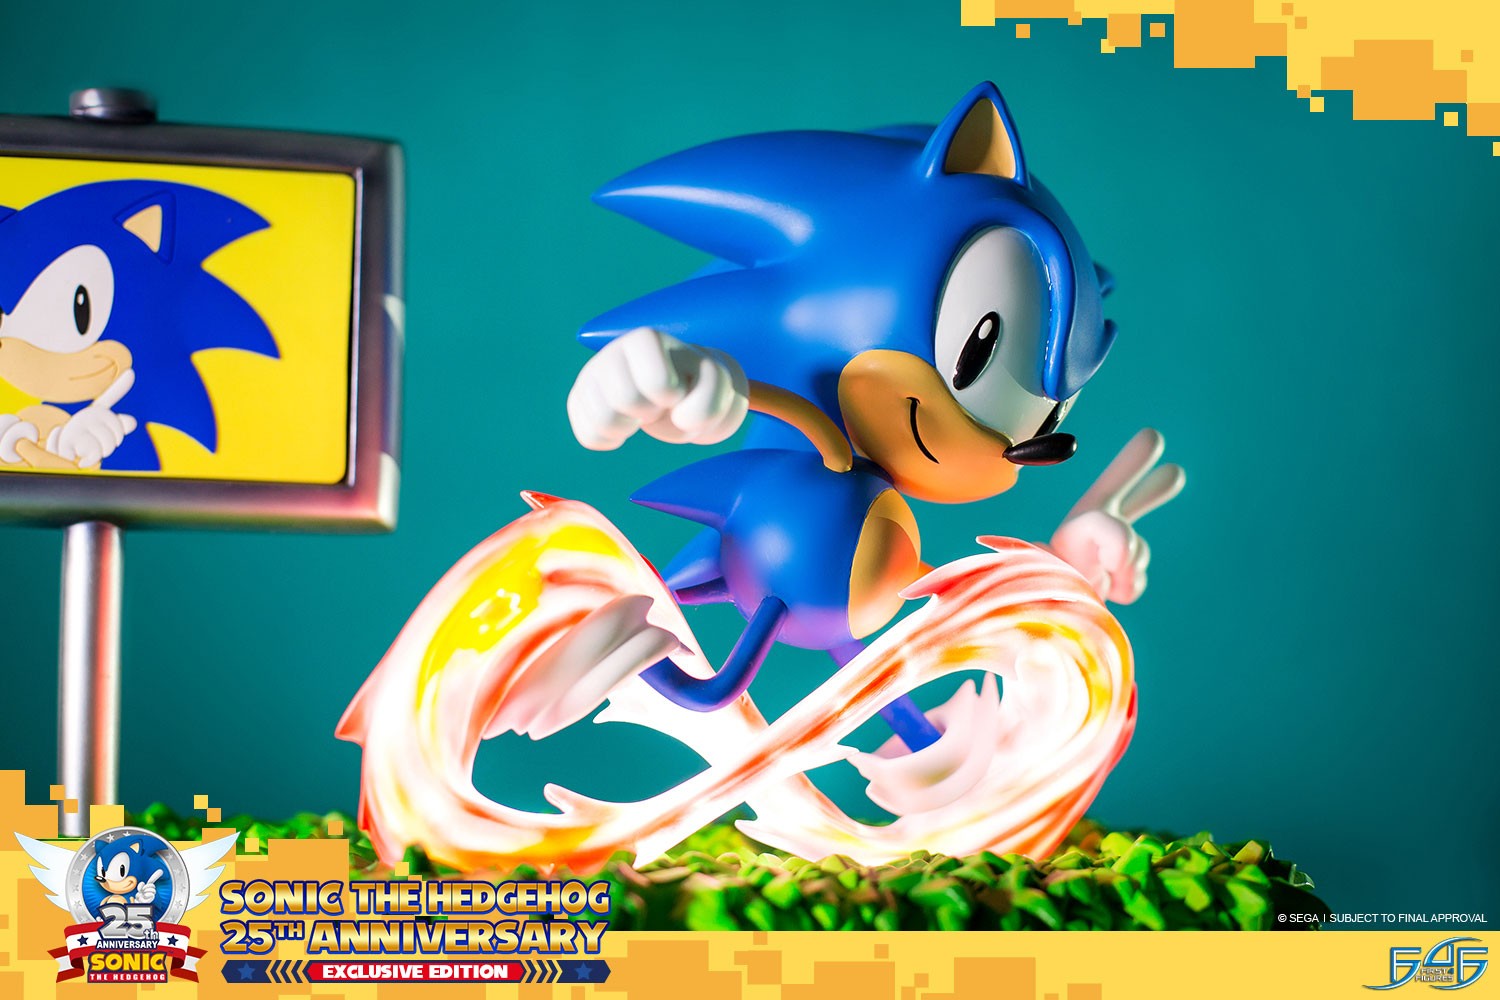 Sonic the Hedgehog character - Wikipedia